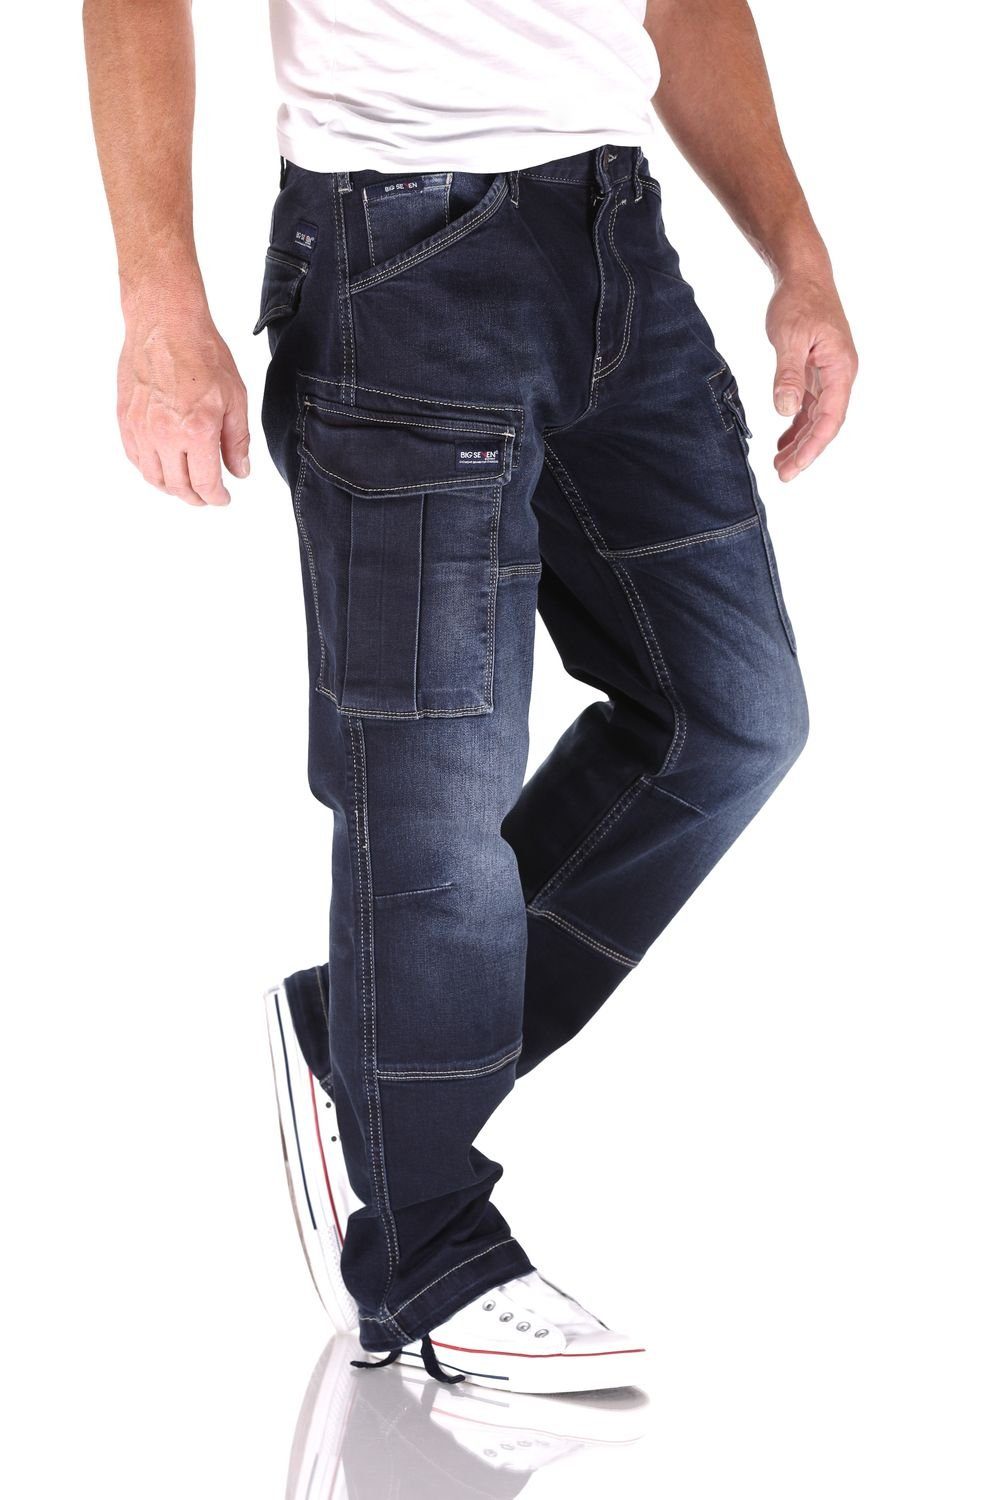 Big Herren Cargo SLC Seven Brian Big Cargojeans Fit Seven Comfort Jeans